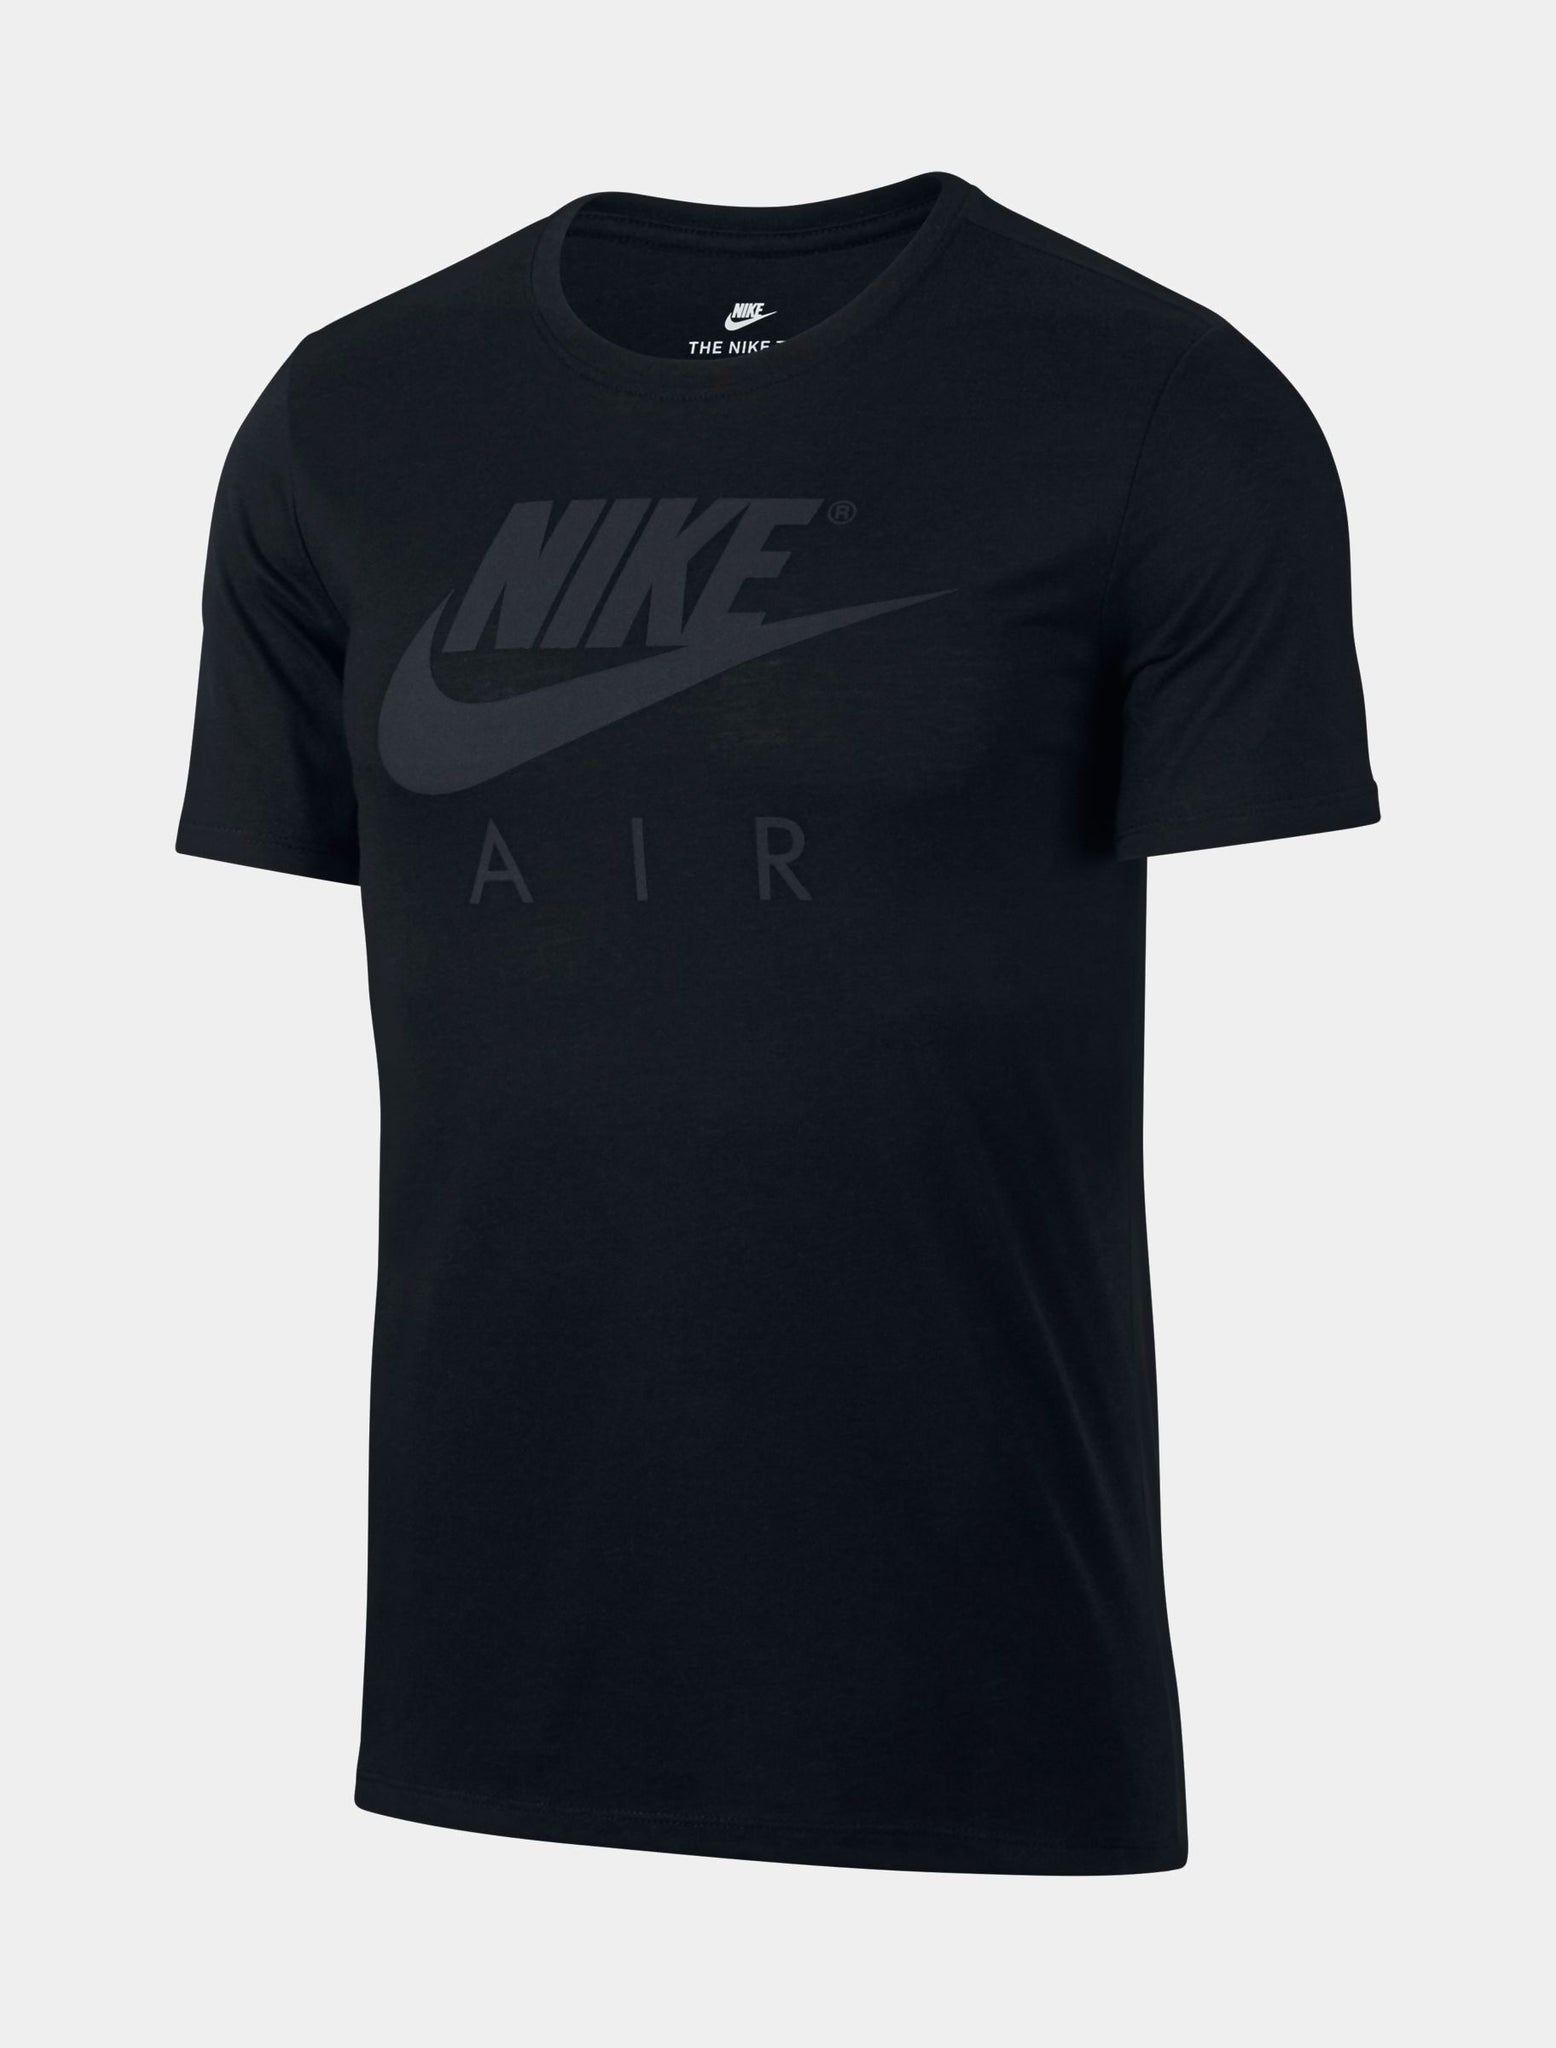 NSW Air Short Sleeve Tee Mens T-Shirt (Black)